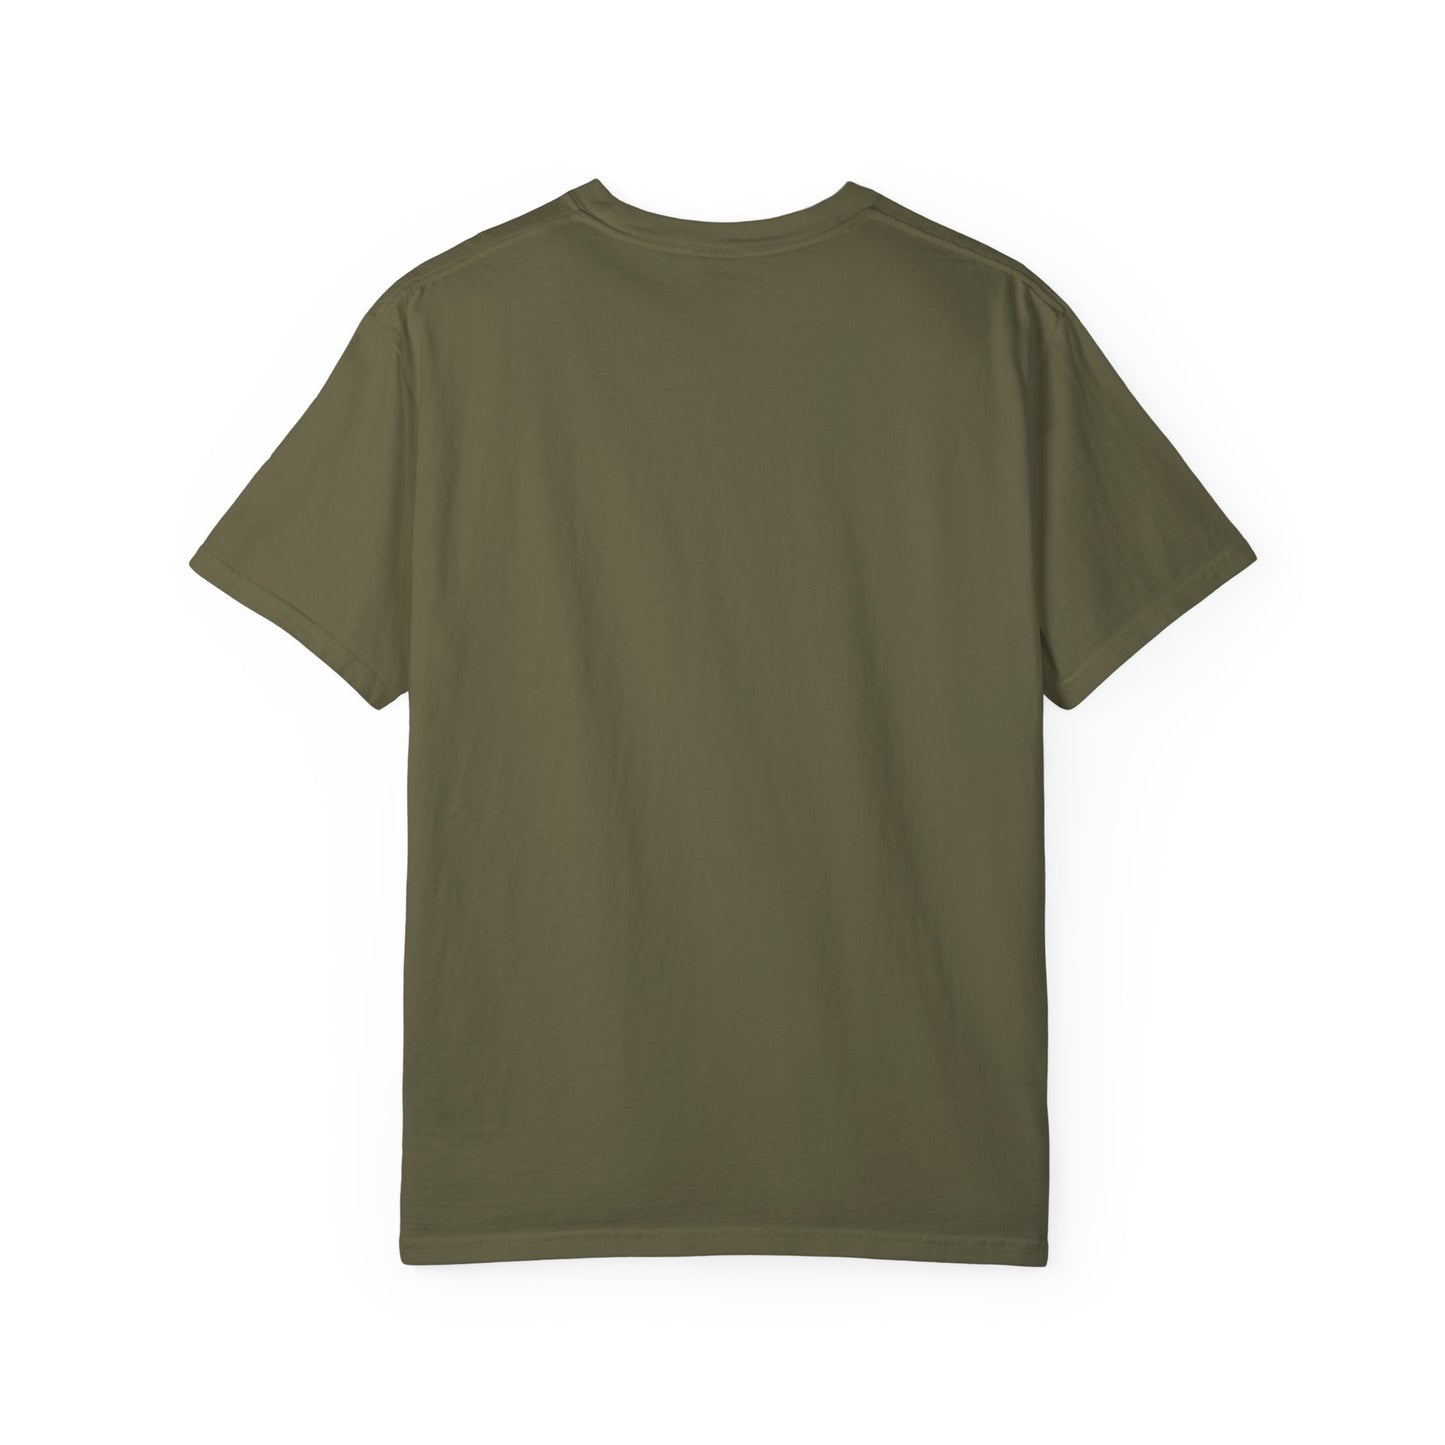 Hip Hop Teddy Bear Graphic Unisex Garment-dyed T-shirt Cotton Funny Humorous Graphic Soft Premium Unisex Men Women Sage T-shirt Birthday Gift-52